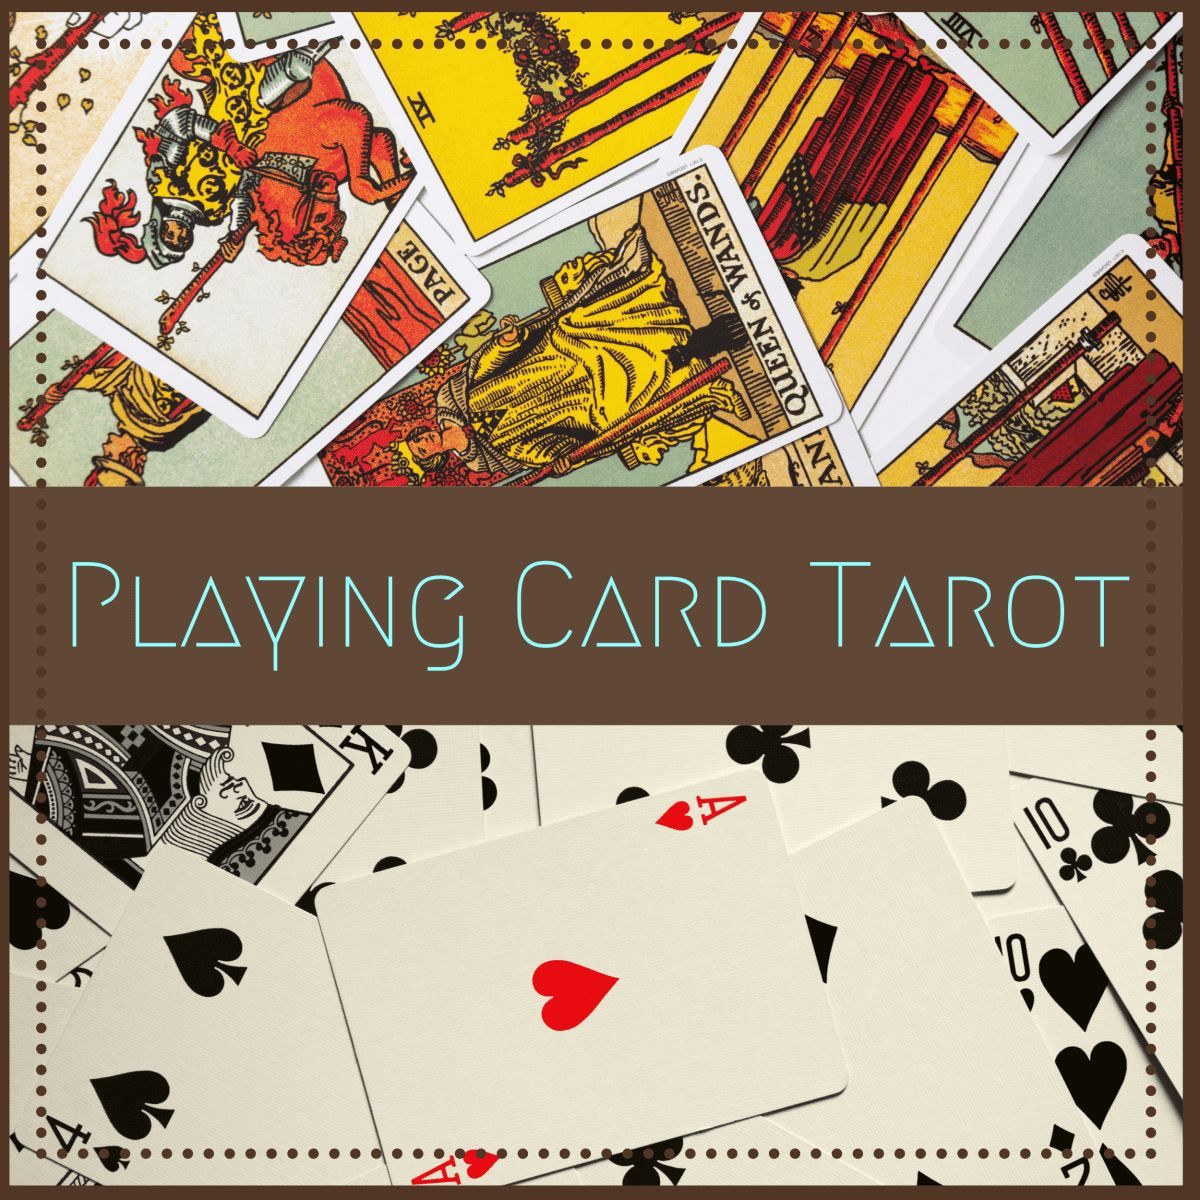 Tarot Card by Card - Tarot Card Meanings